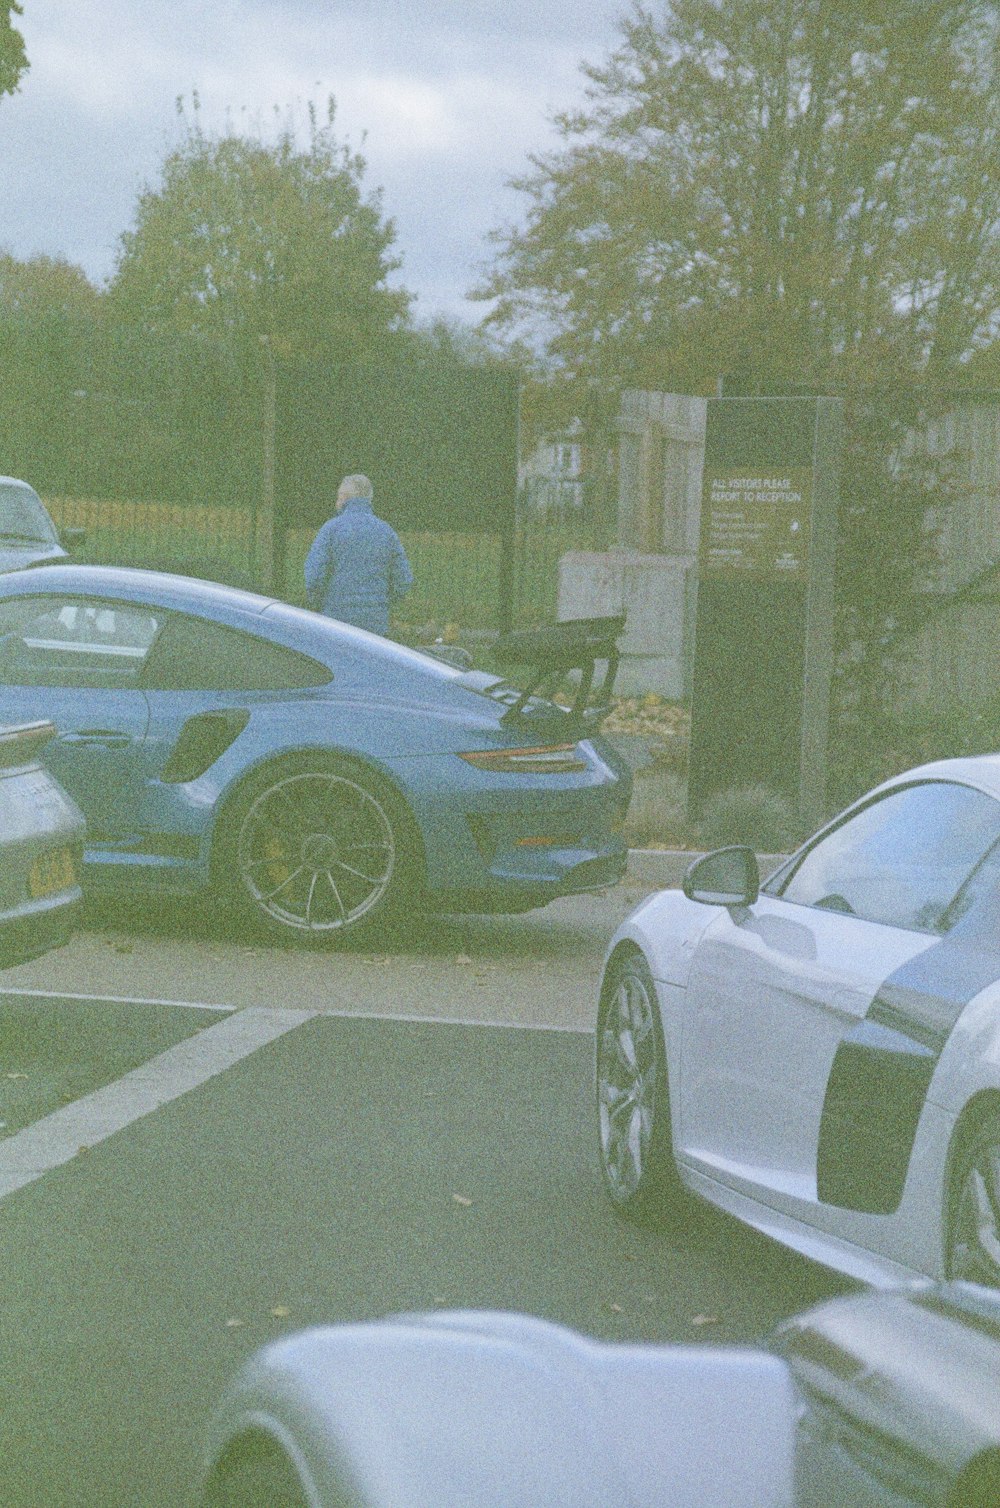 a man standing next to a blue sports car